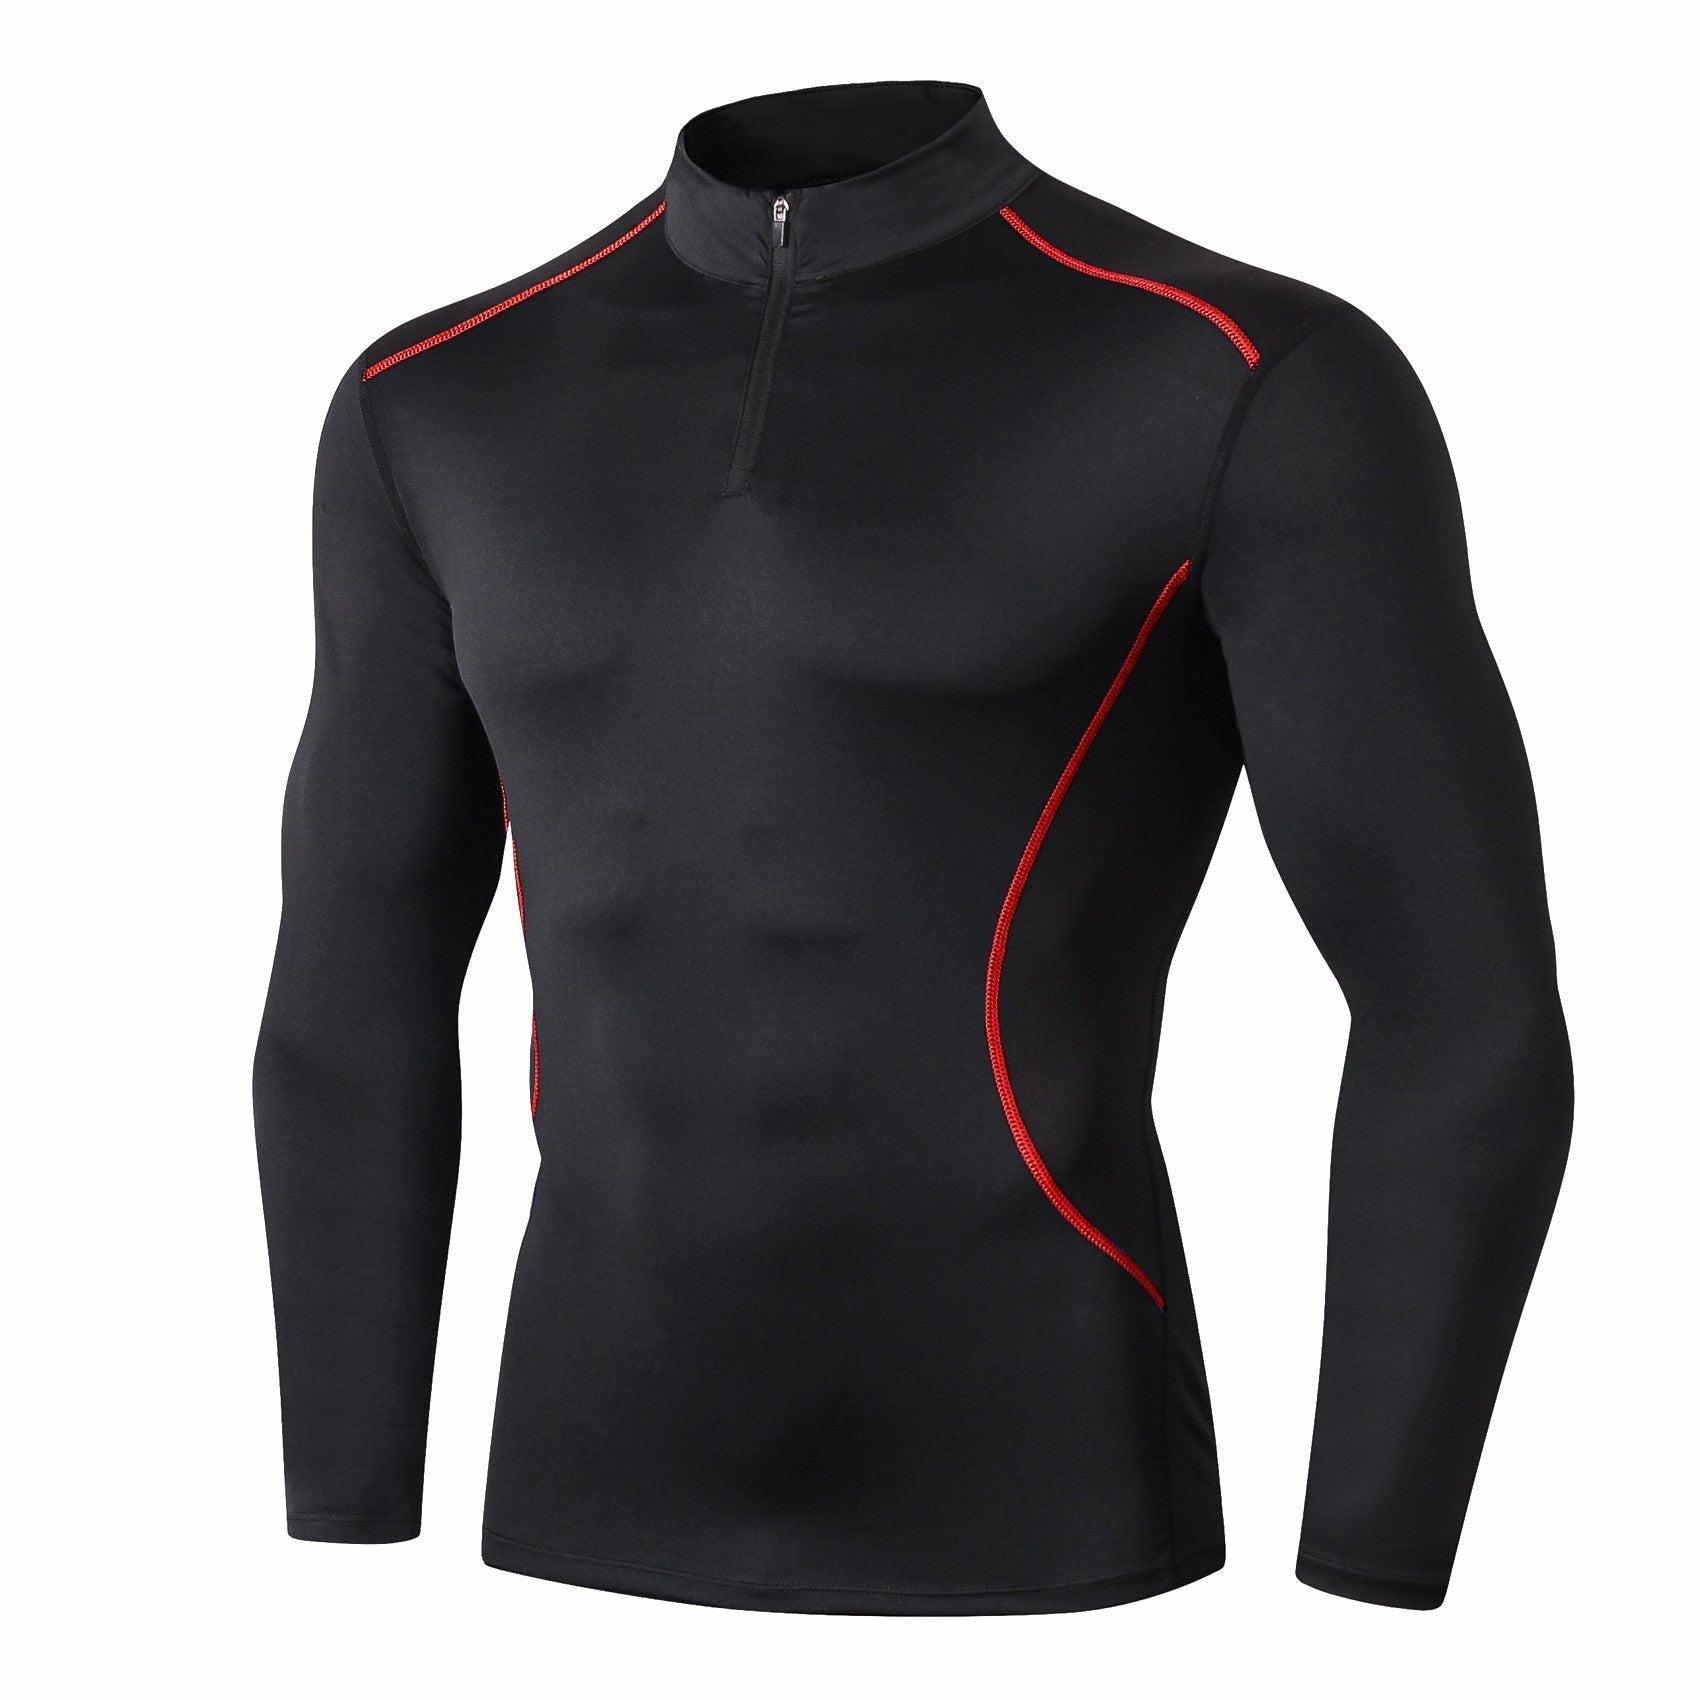 LANBAOSI Men's Winter Thermal Fleece Underwear Sportswear Compression Tight  Baselayer Cycling Running Workout Training Shirts